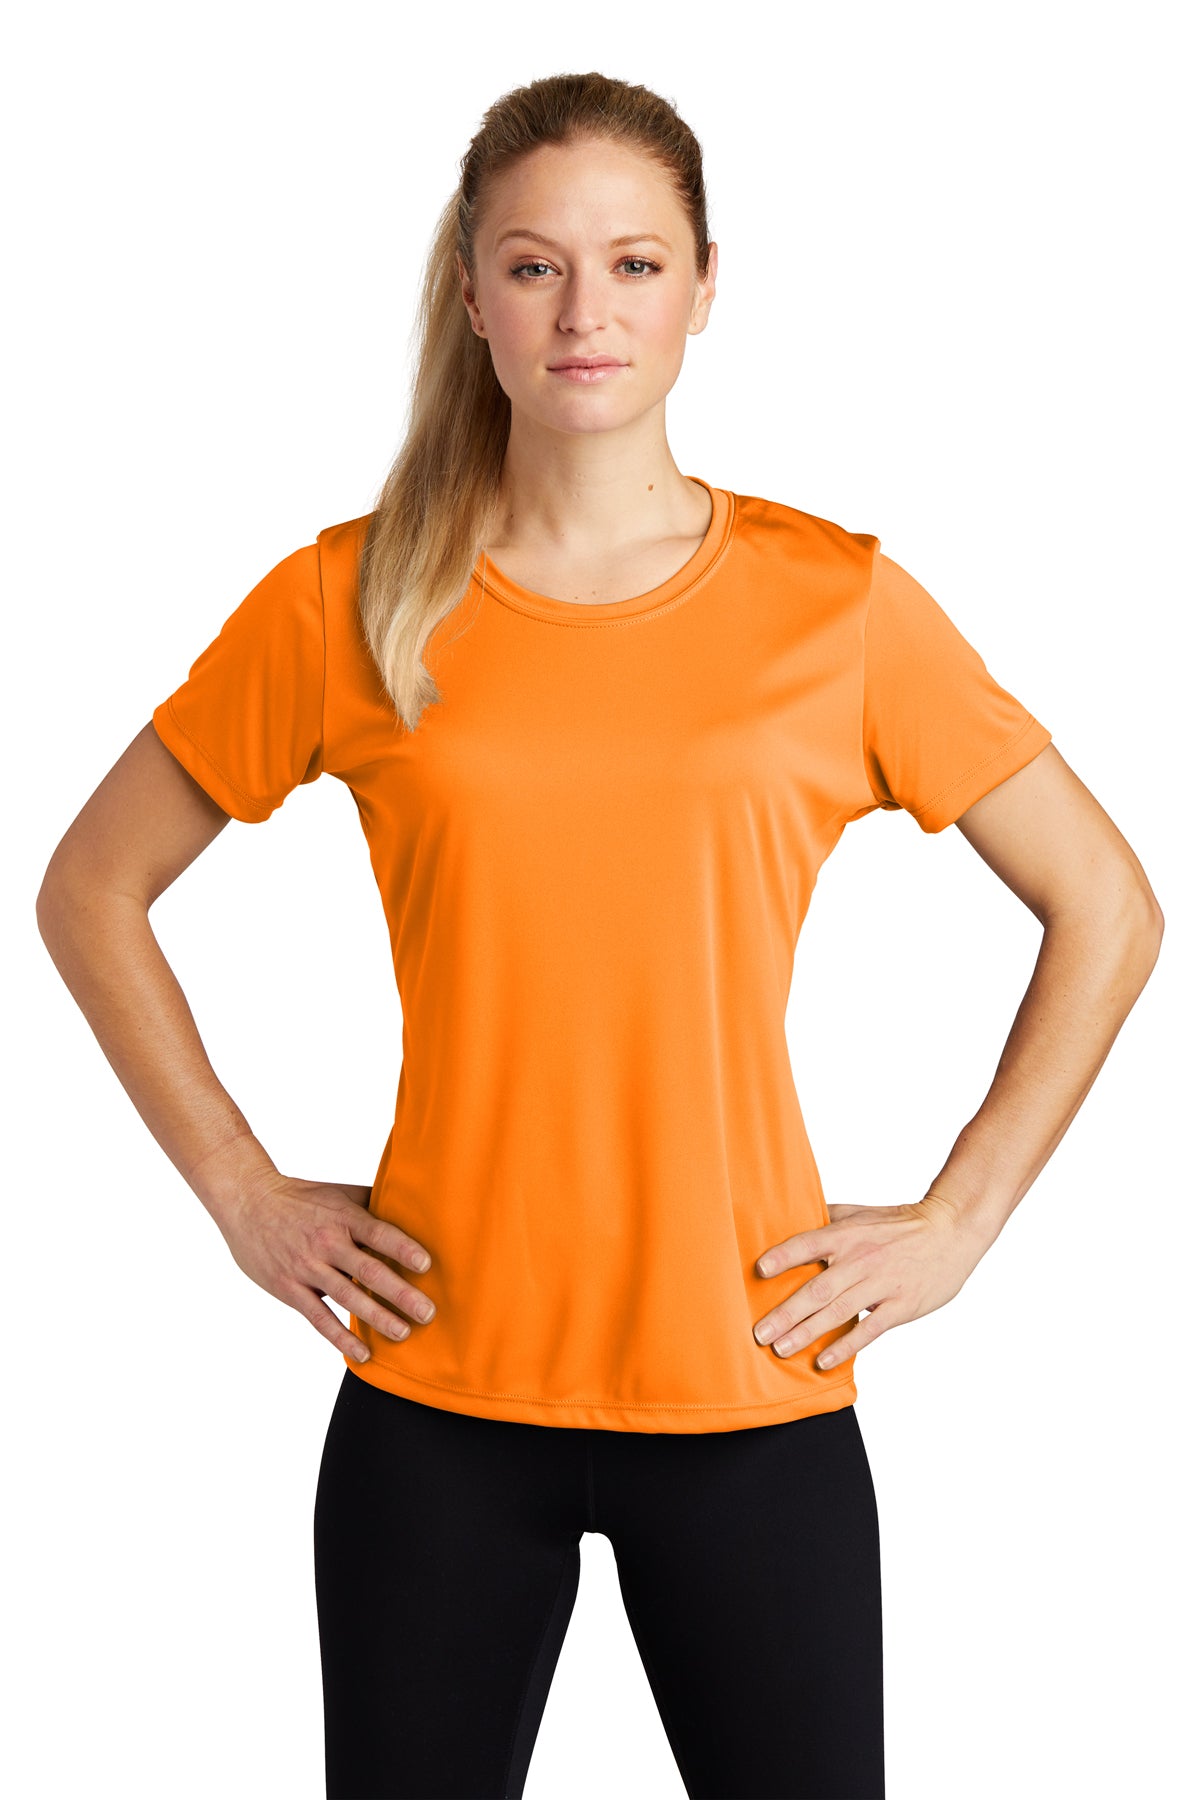 Sport Tek Ladies Performance Tee - S Neon Orange